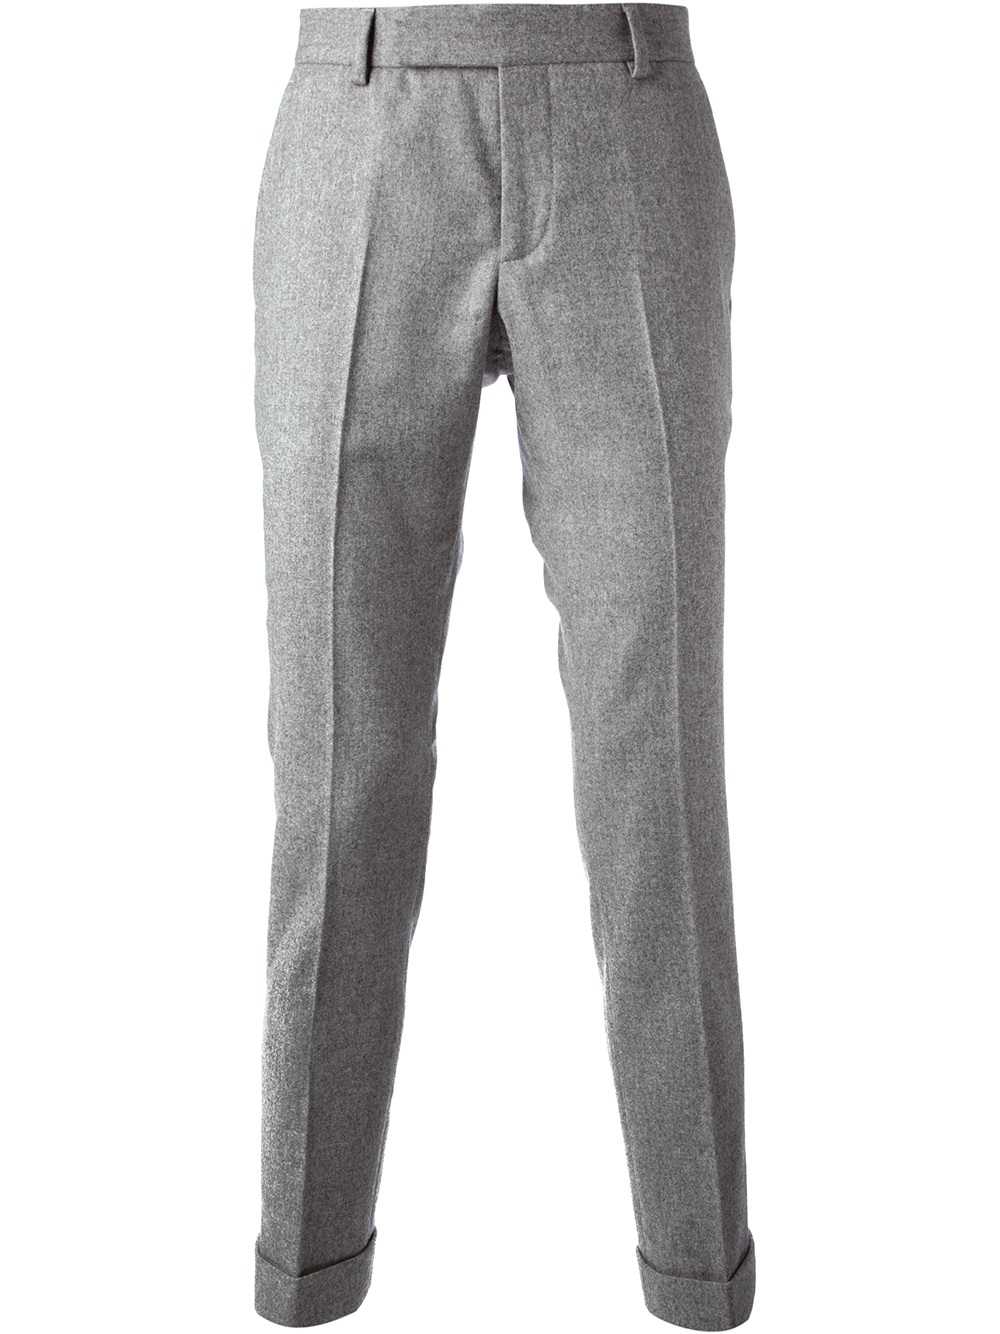 gucci grey pants